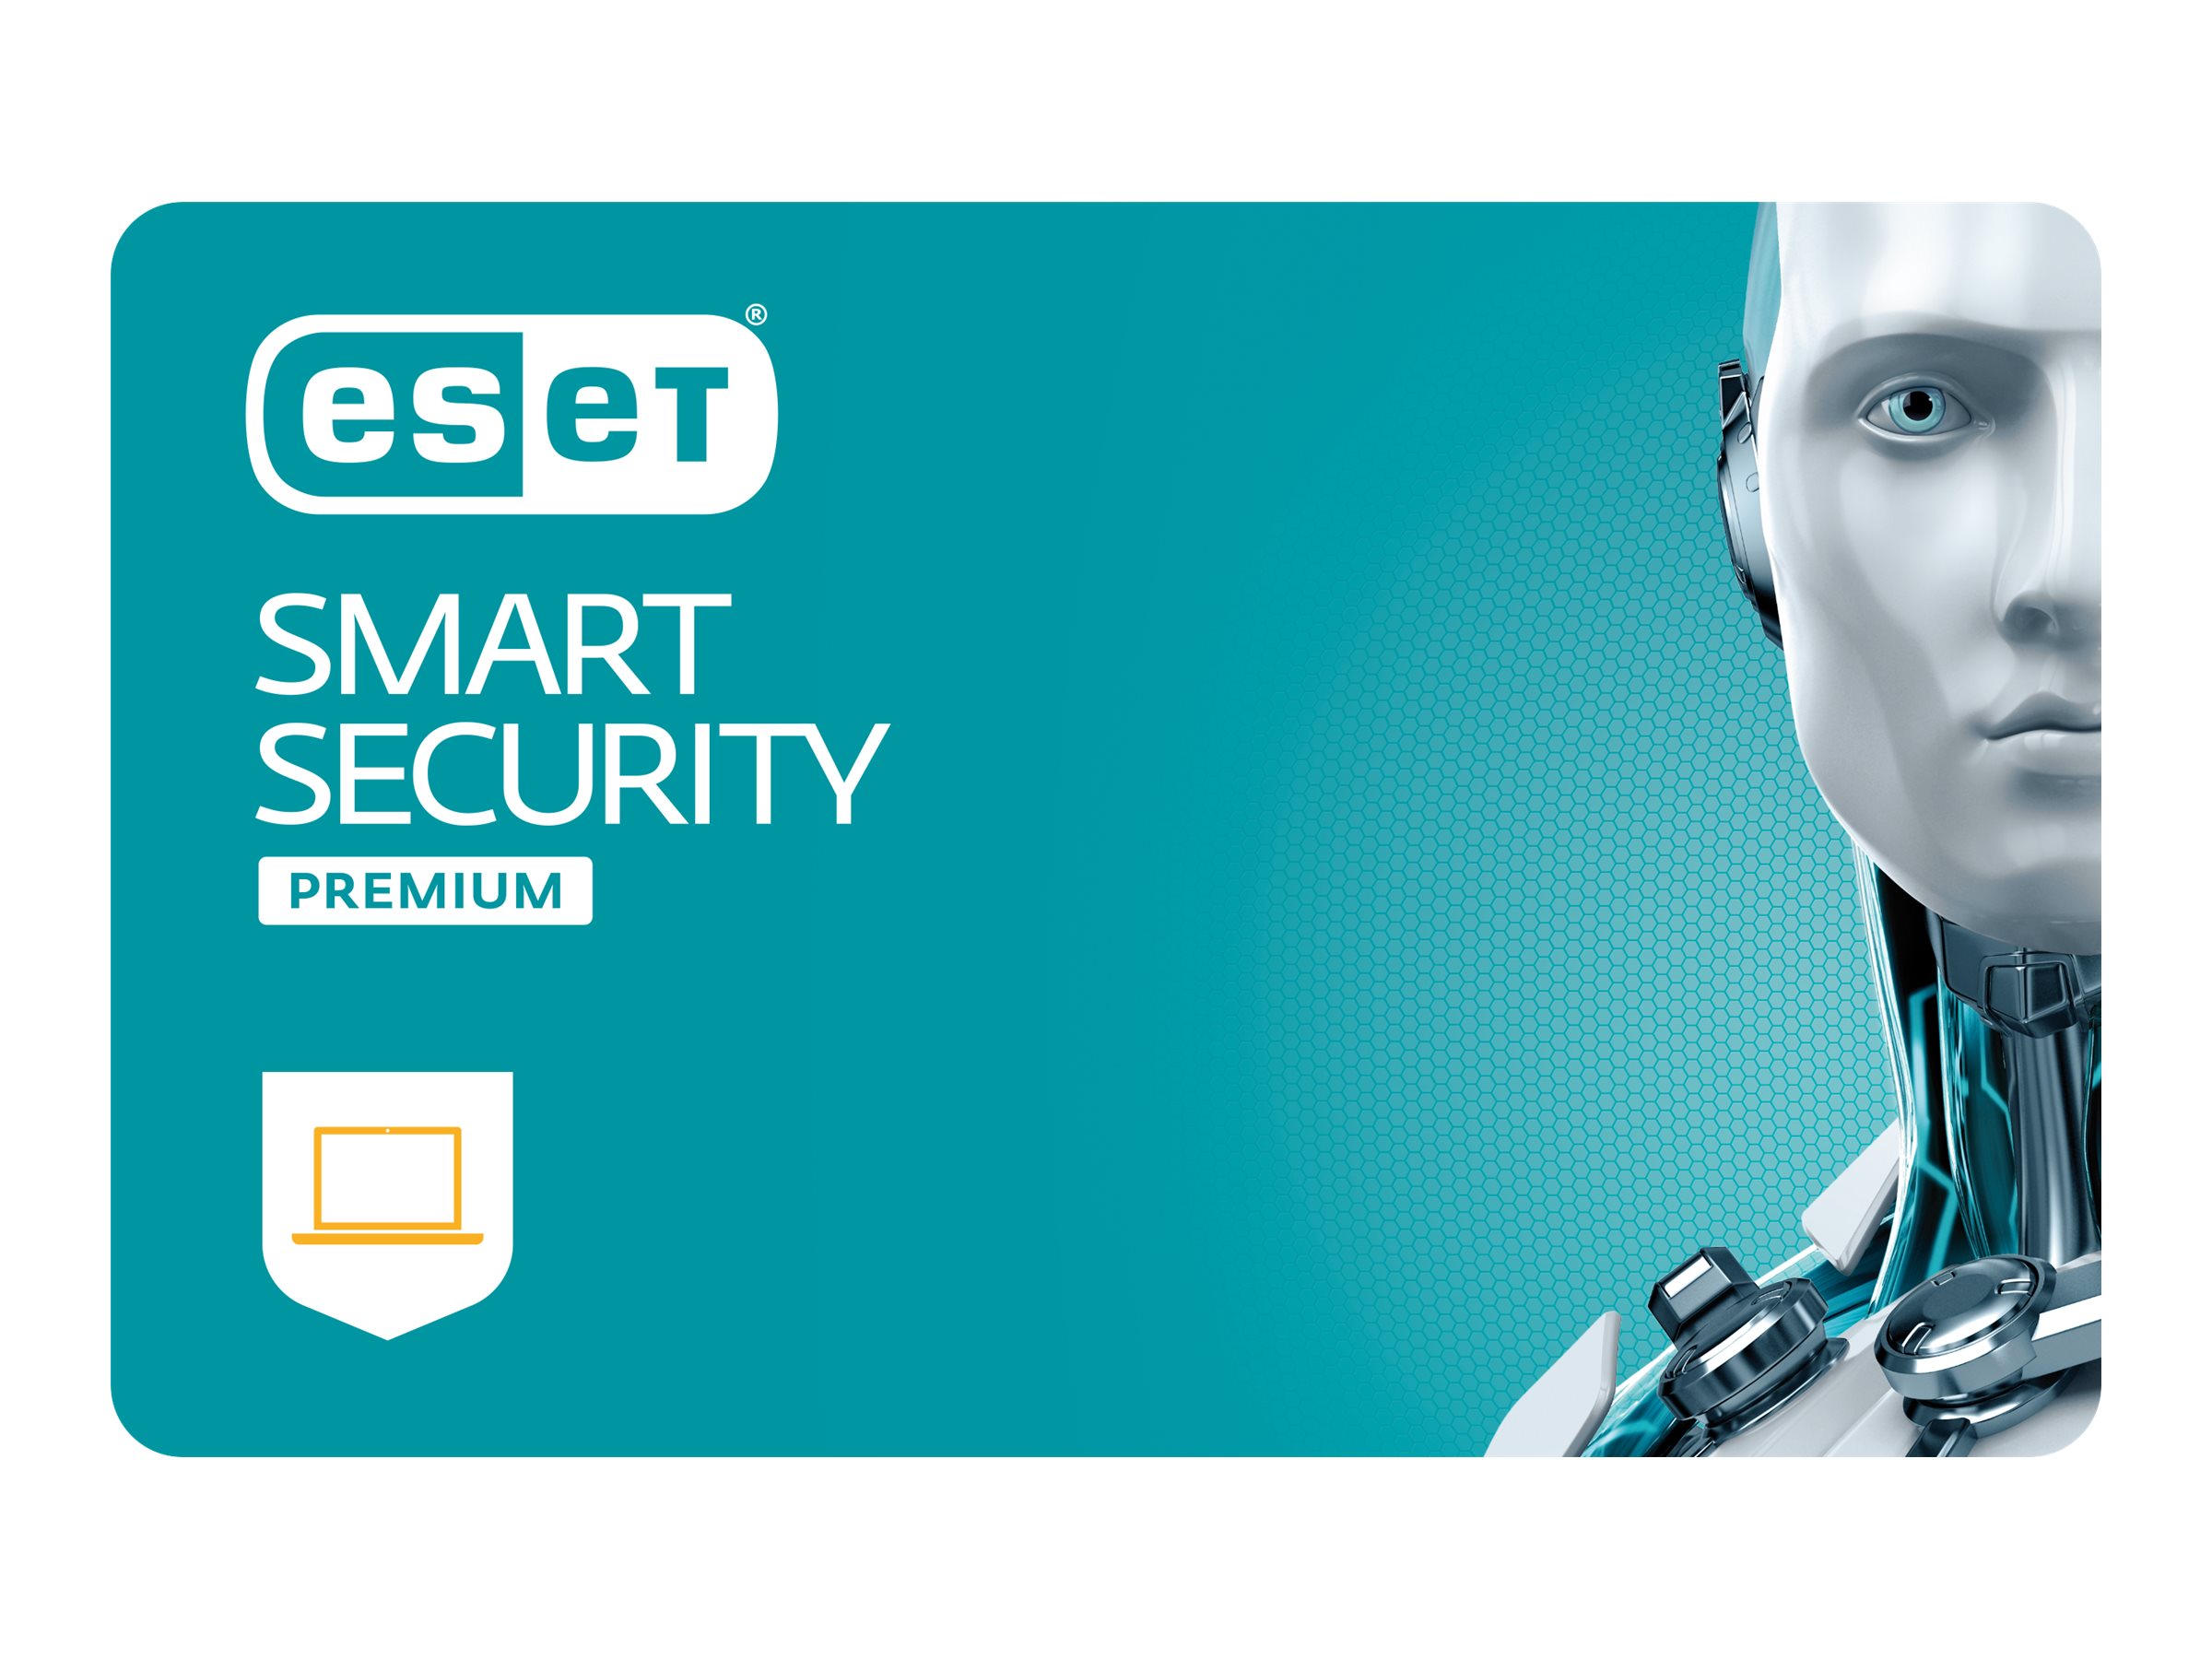 ESET Smart Security Premium Lizenz per Devices (3 Device) inklusive 2 Jahre Aktualisierungsgarantie